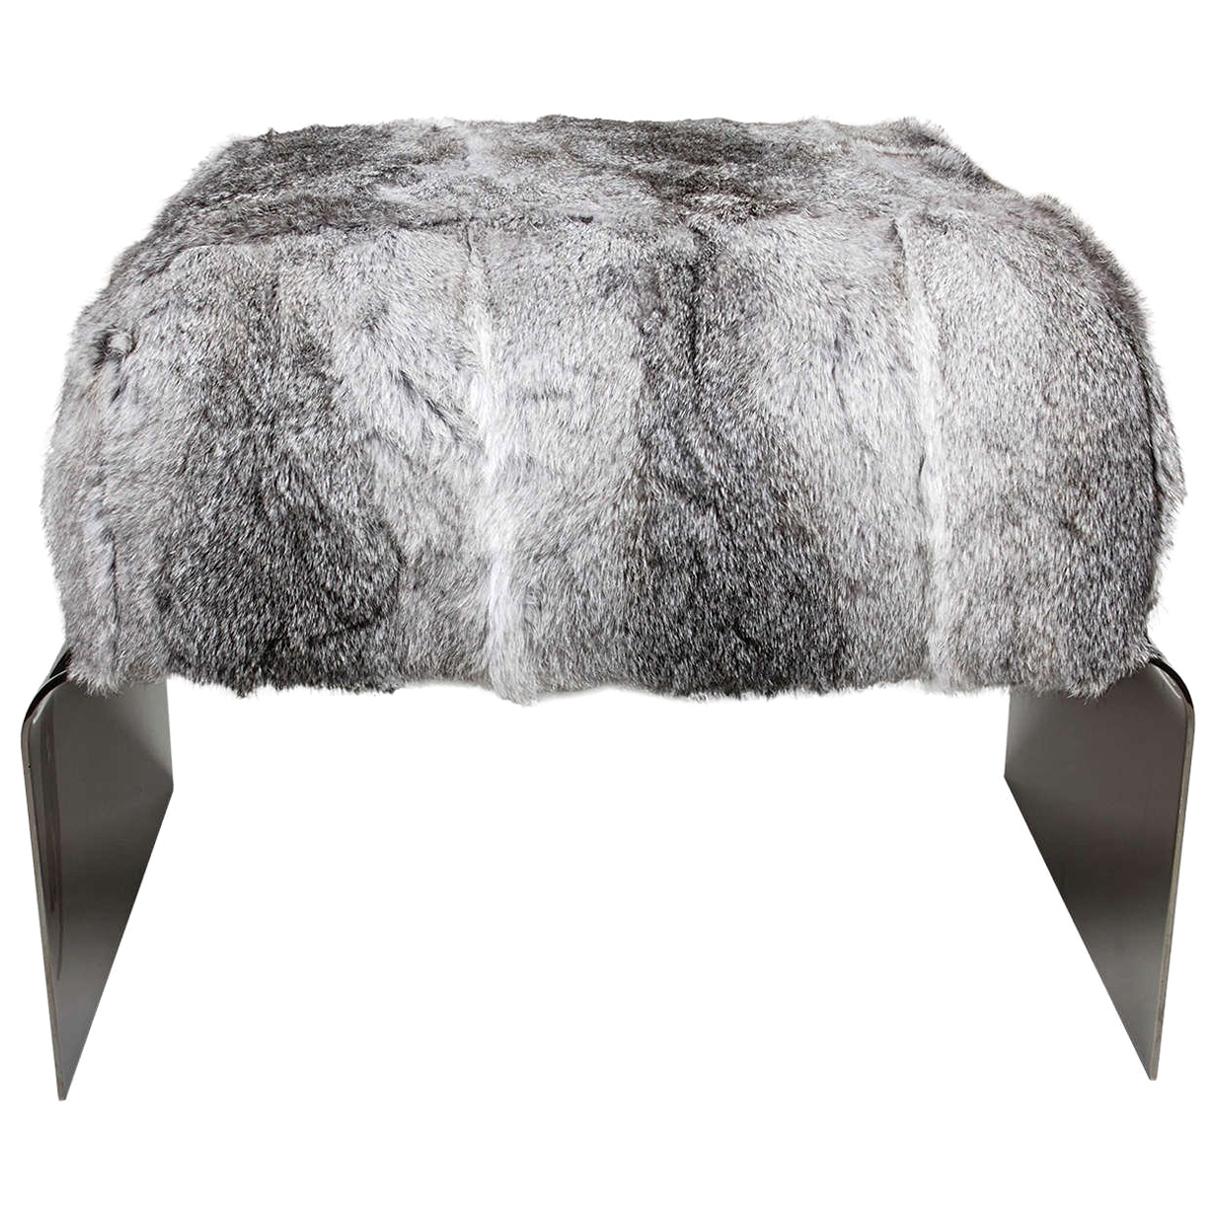 Rabbit Fur Luxury Ottoman Bench with Steel Base in Black Nickel